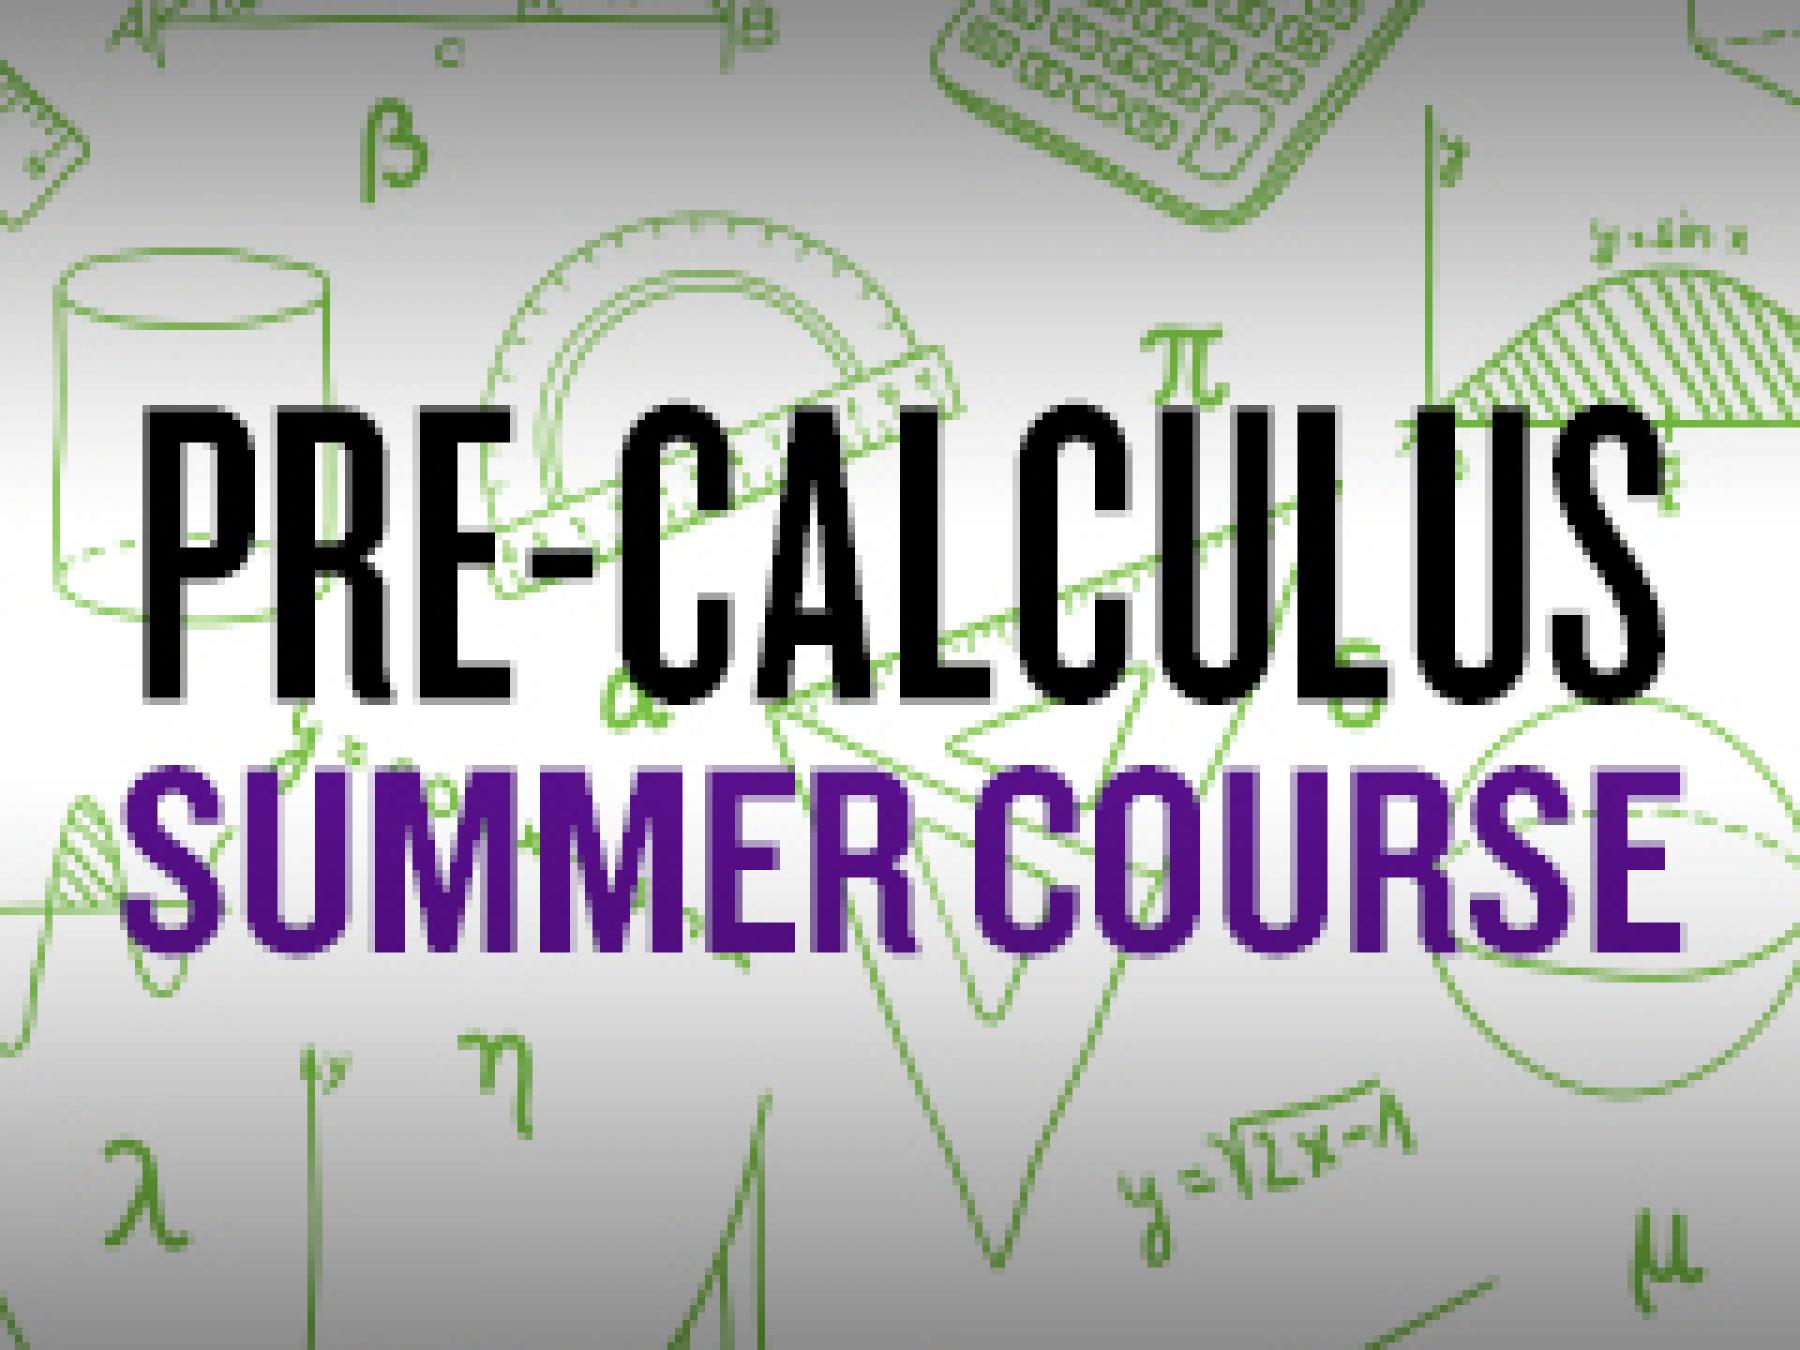 summer calculus courses